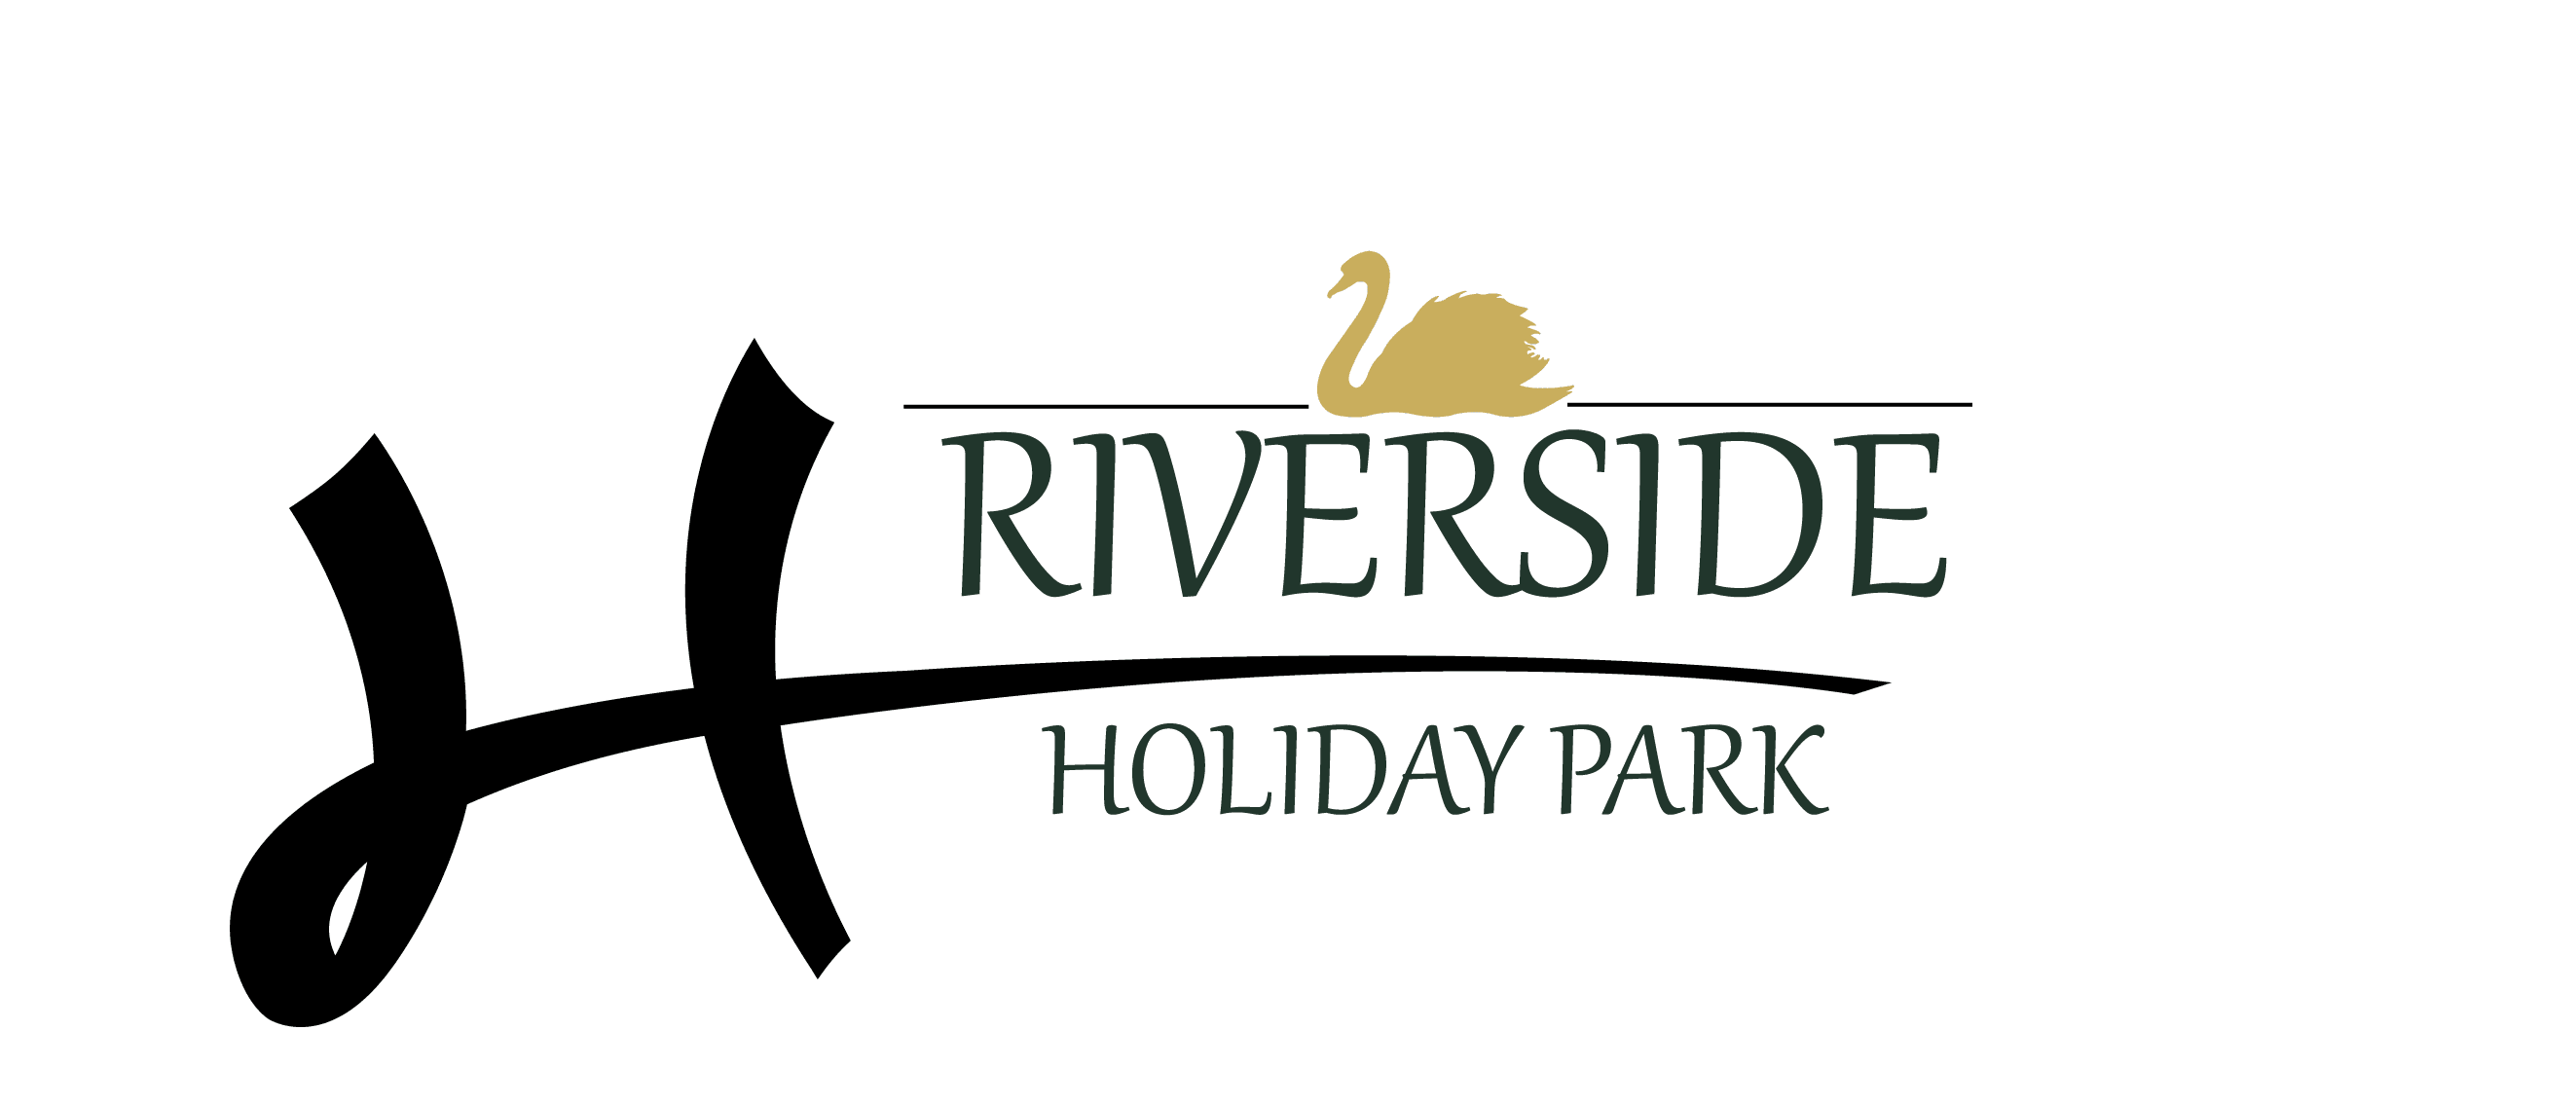 Riverside Holiday Park